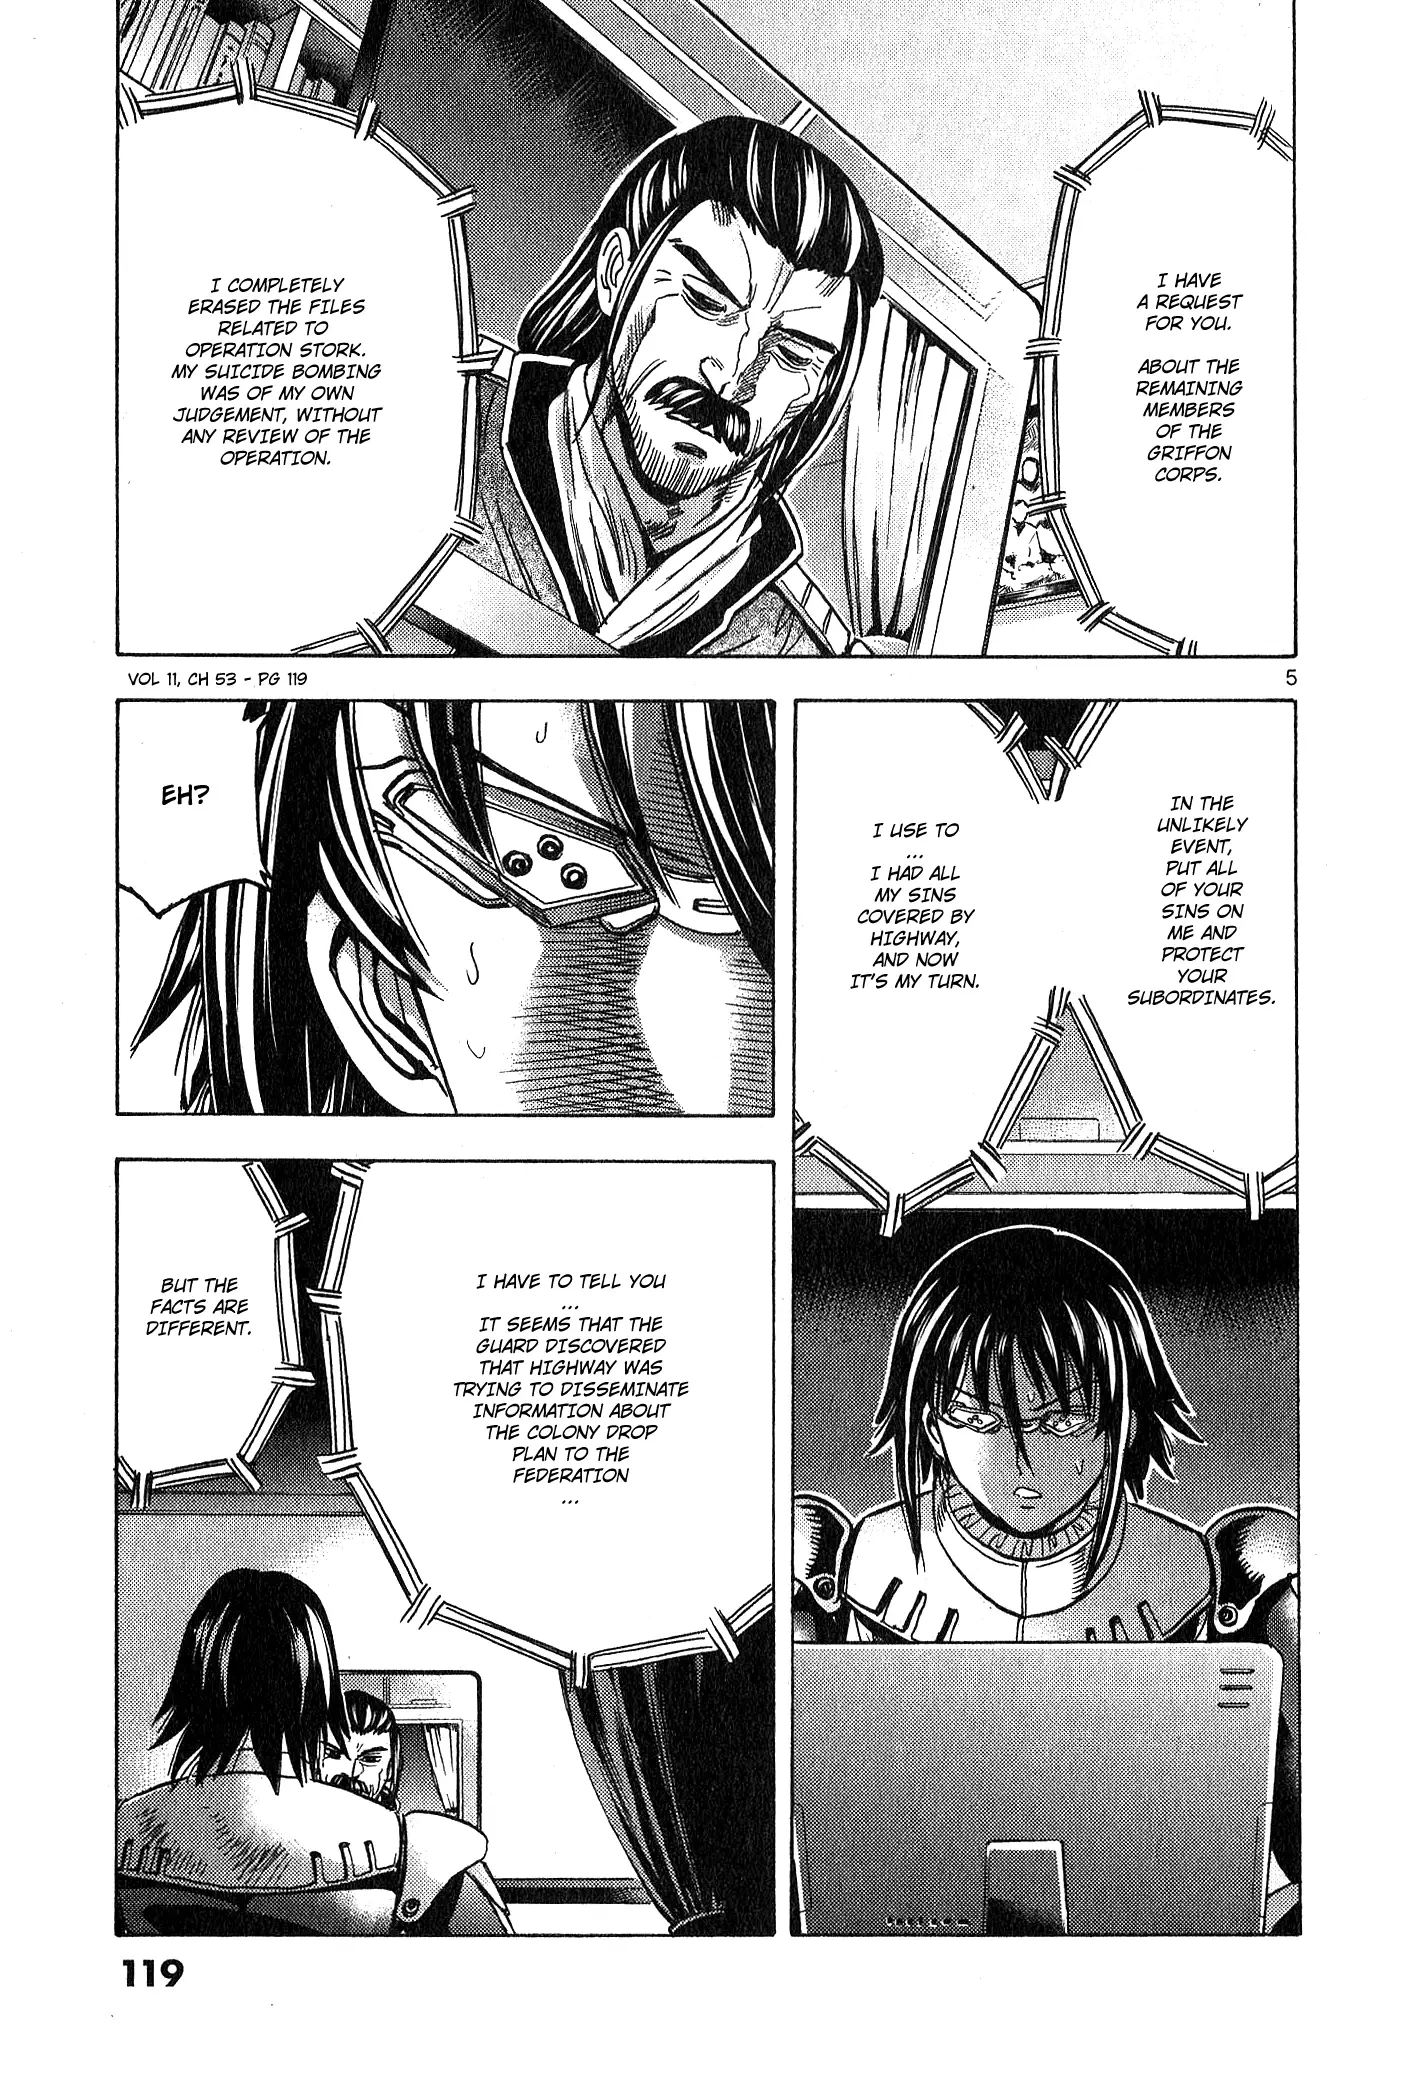 Mobile Suit Gundam Aggressor - 53 page 5-6eff58dd